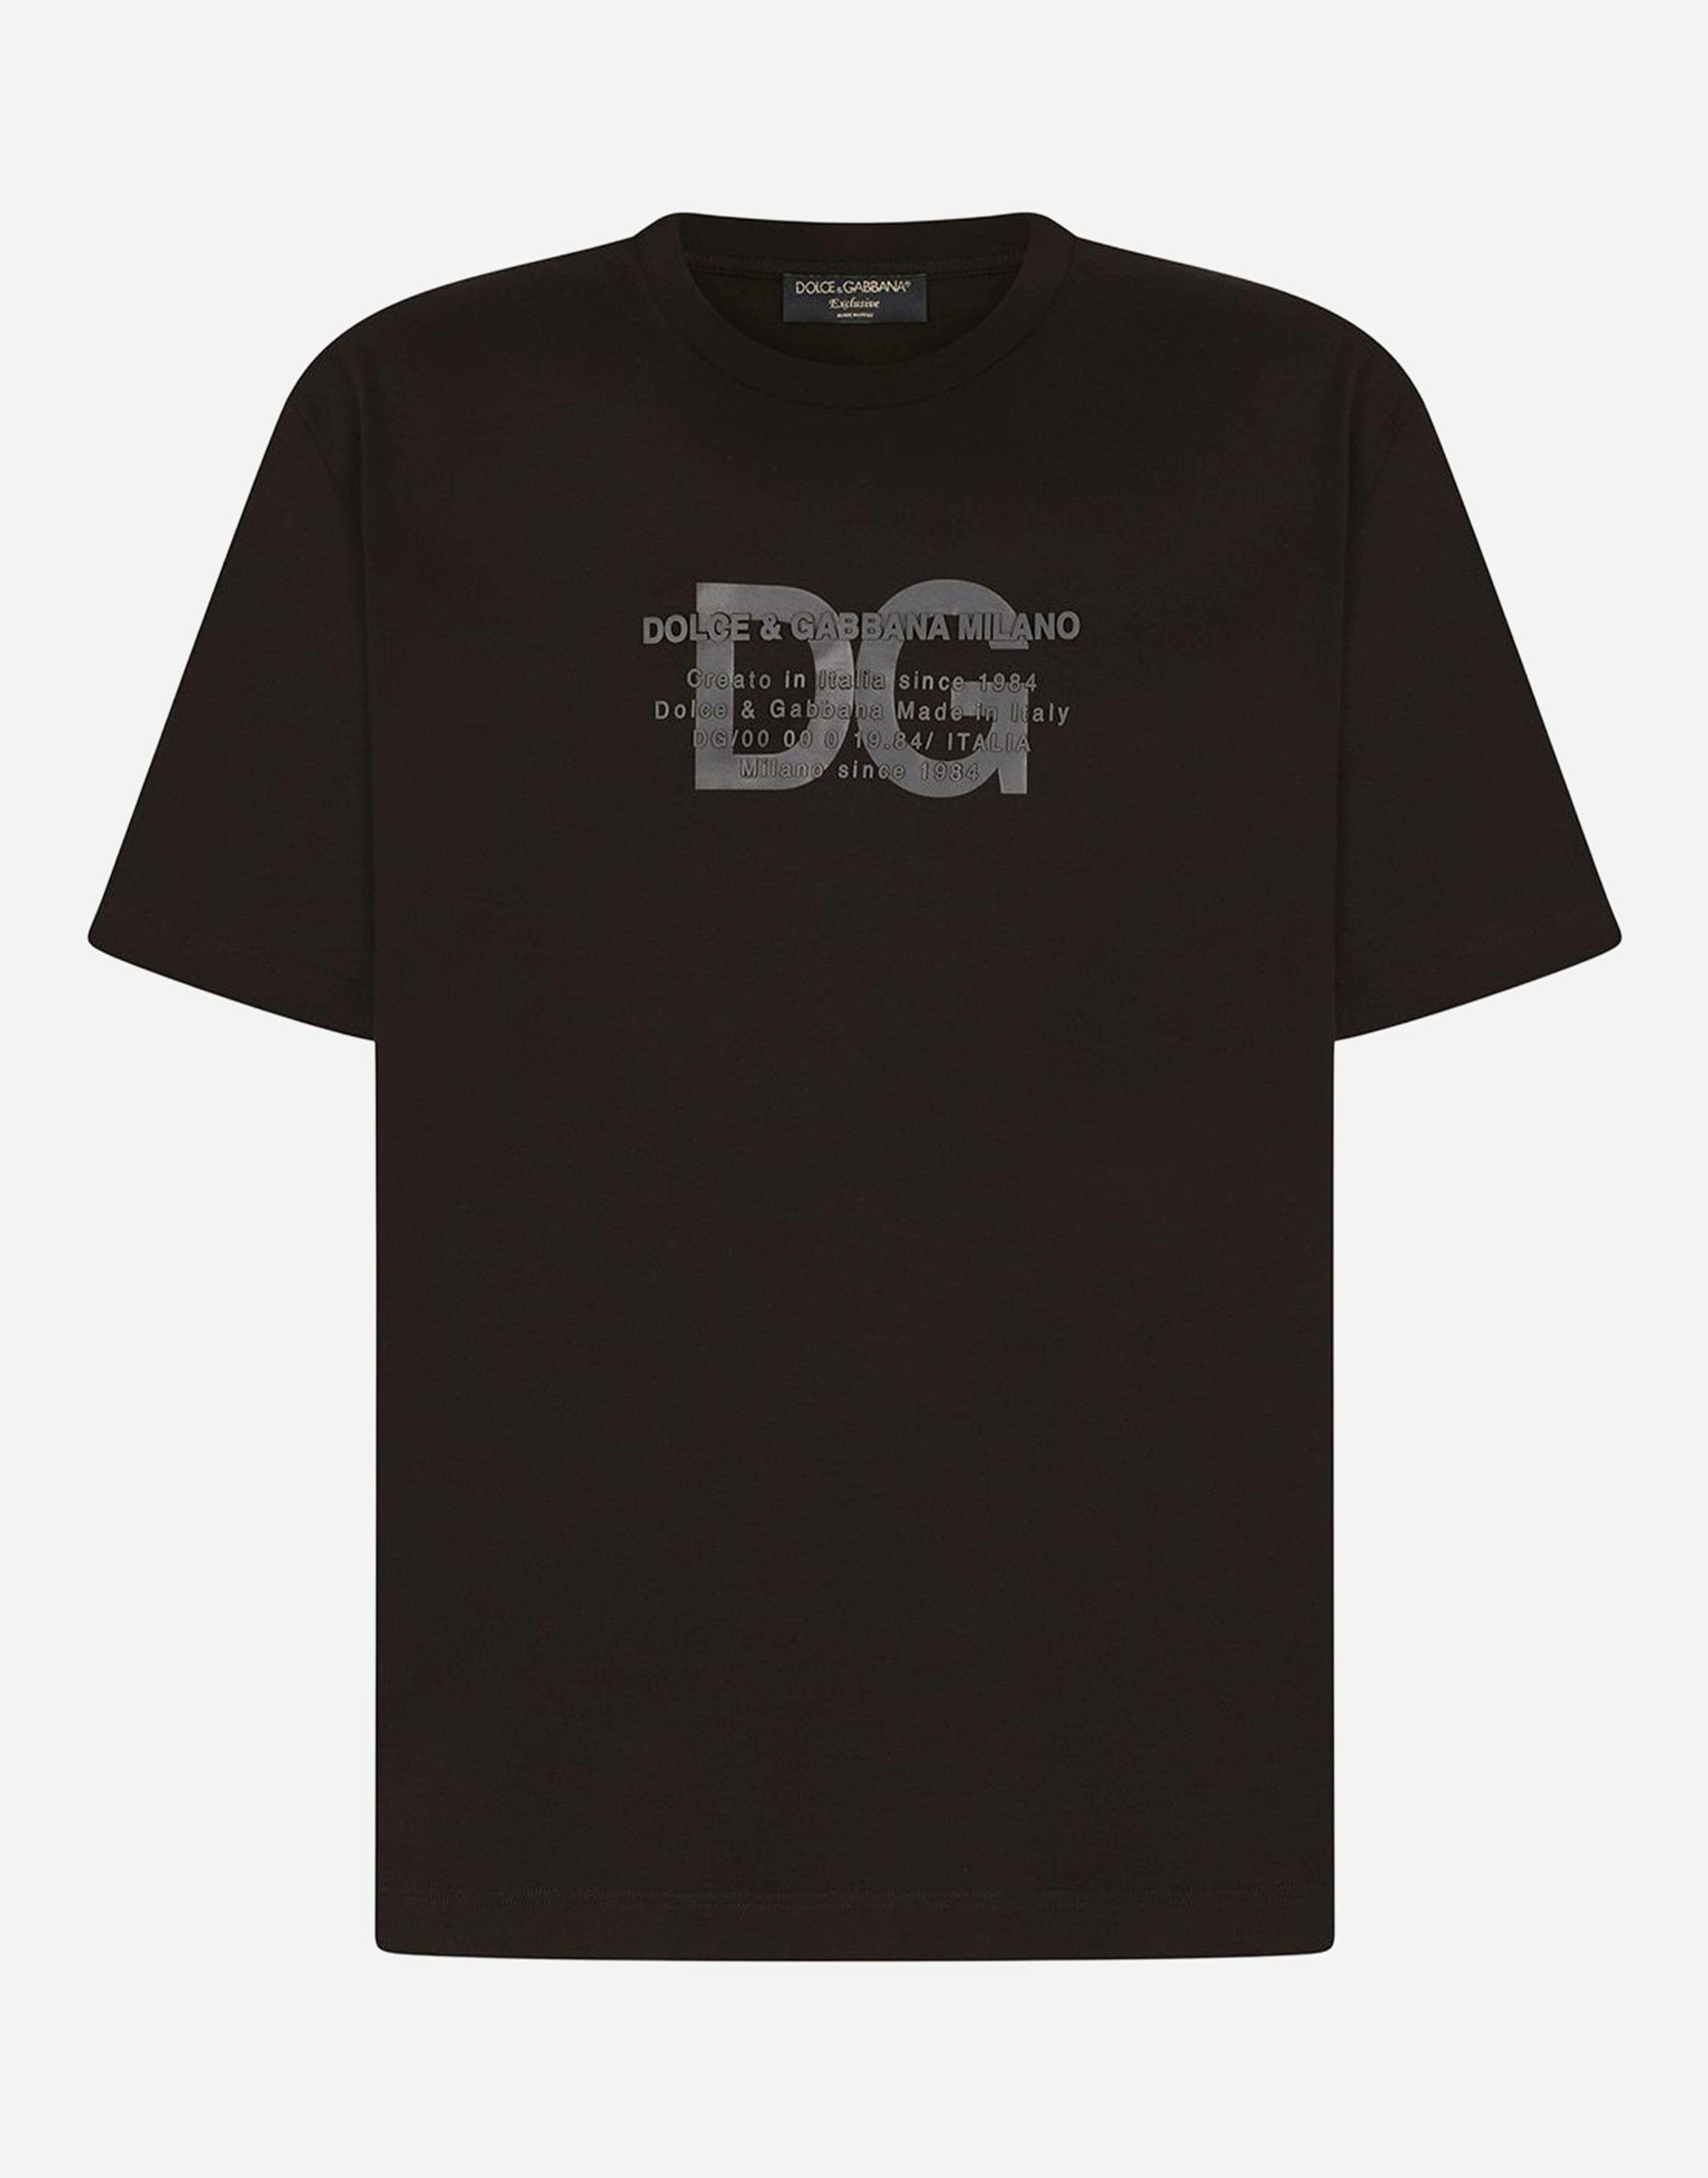 Dolce & Gabbana T-Shirts for Men - Tees | Sale | Sendegaro